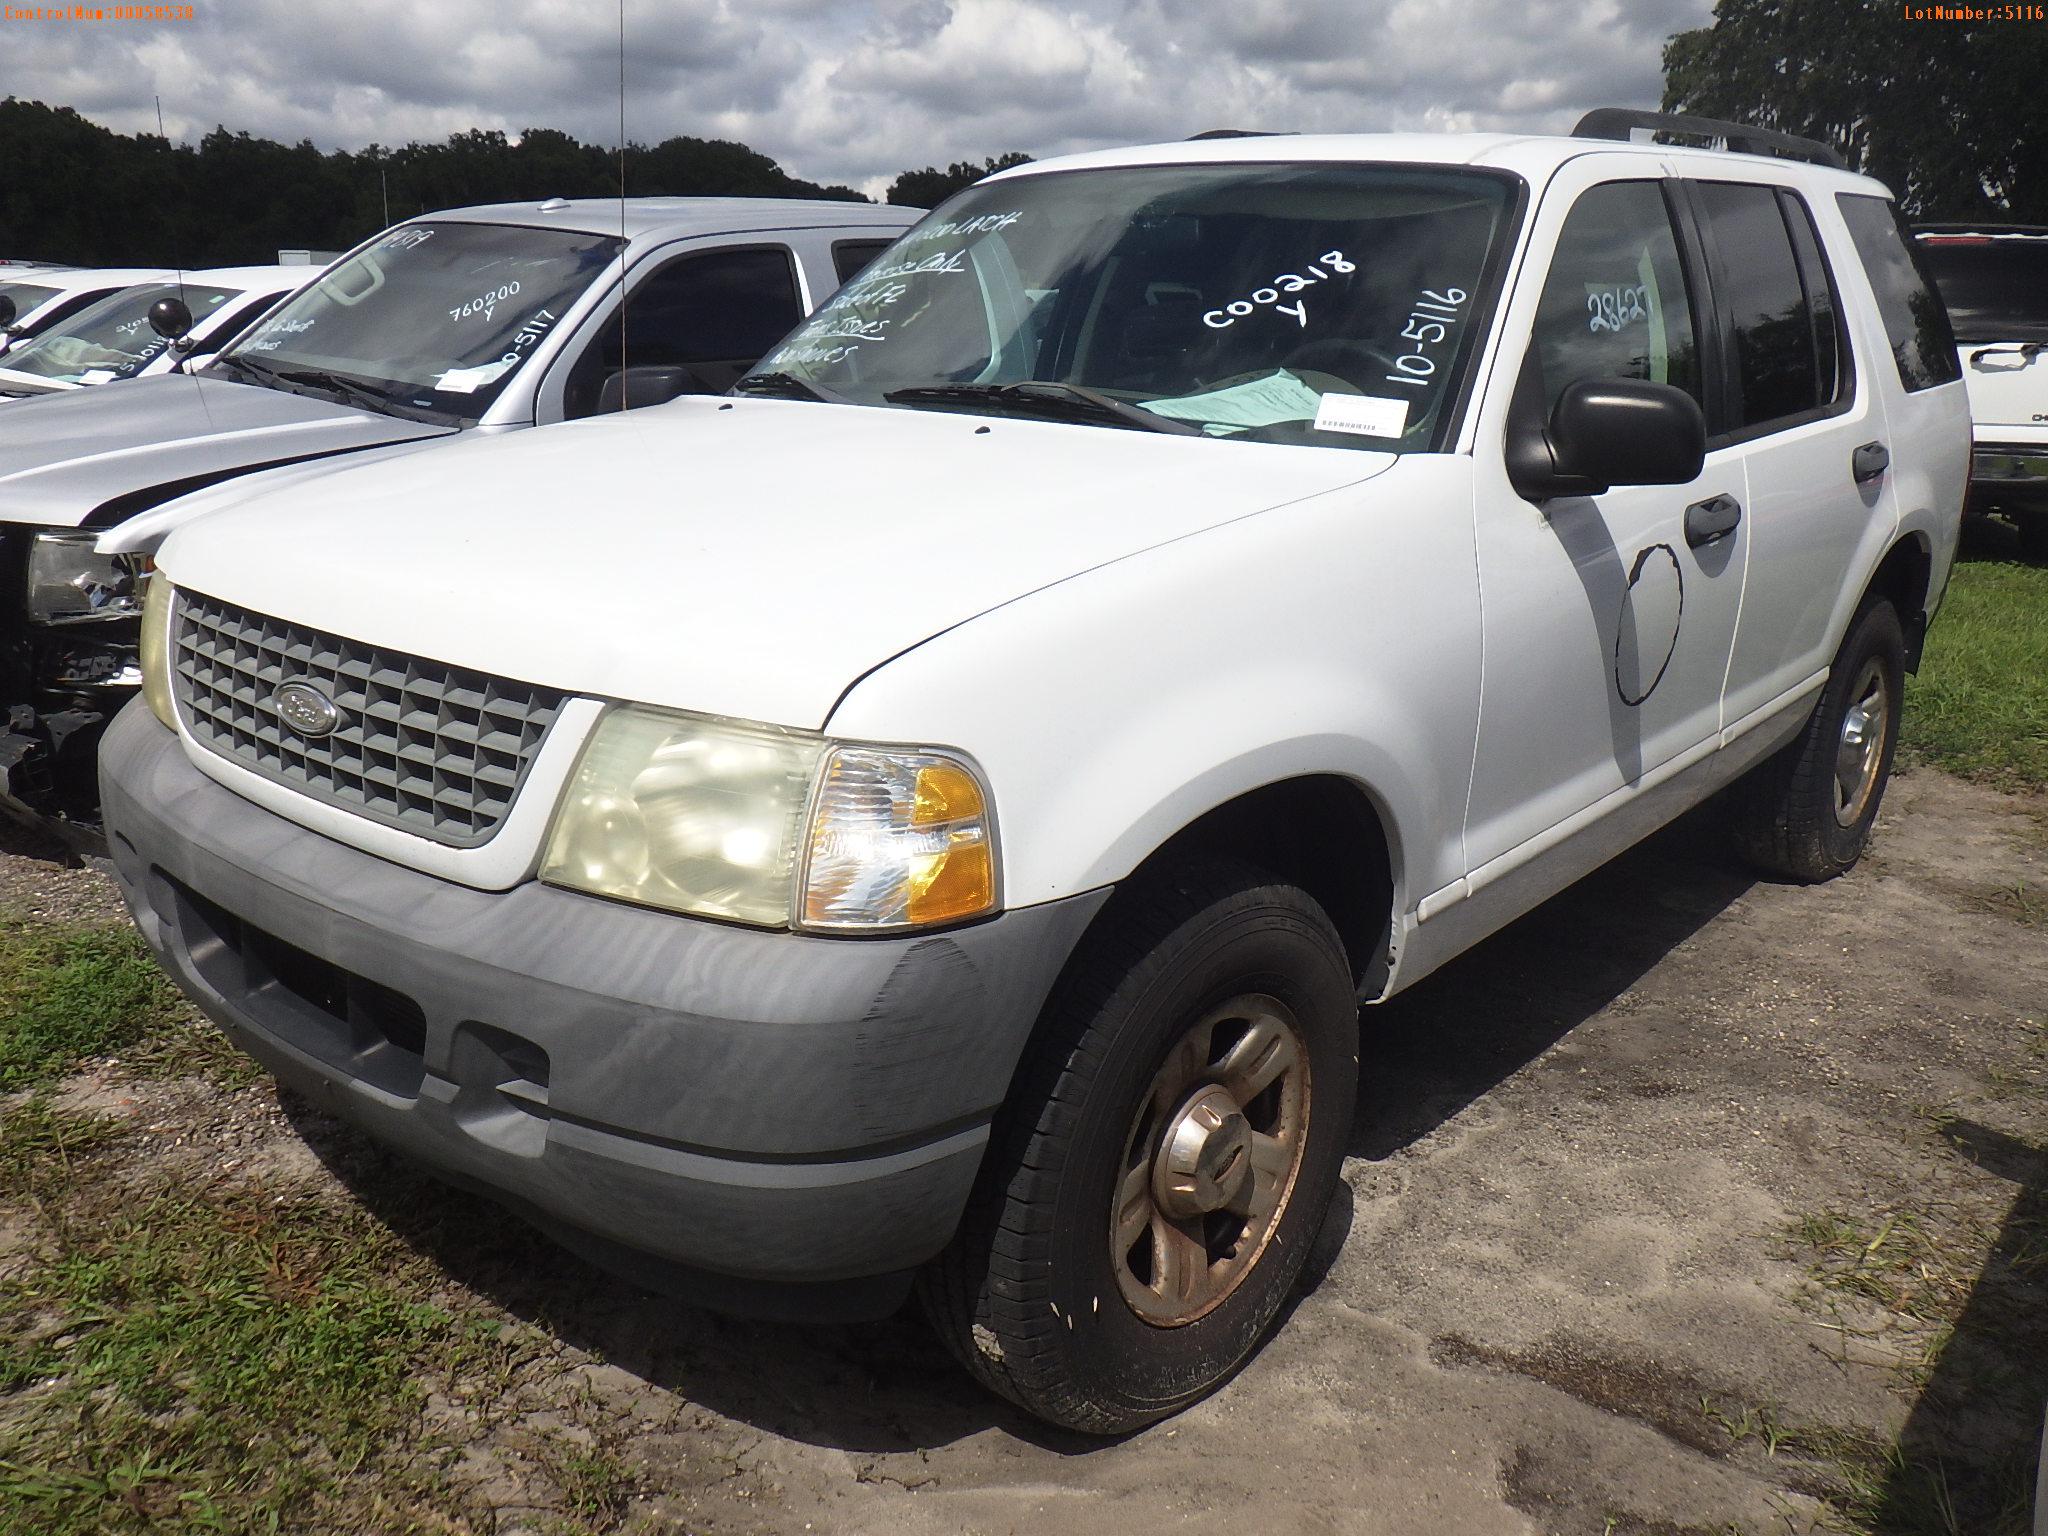 10-05116 (Cars-SUV 4D)  Seller: Florida State D.O.T. 2003 FORD EXPLORER